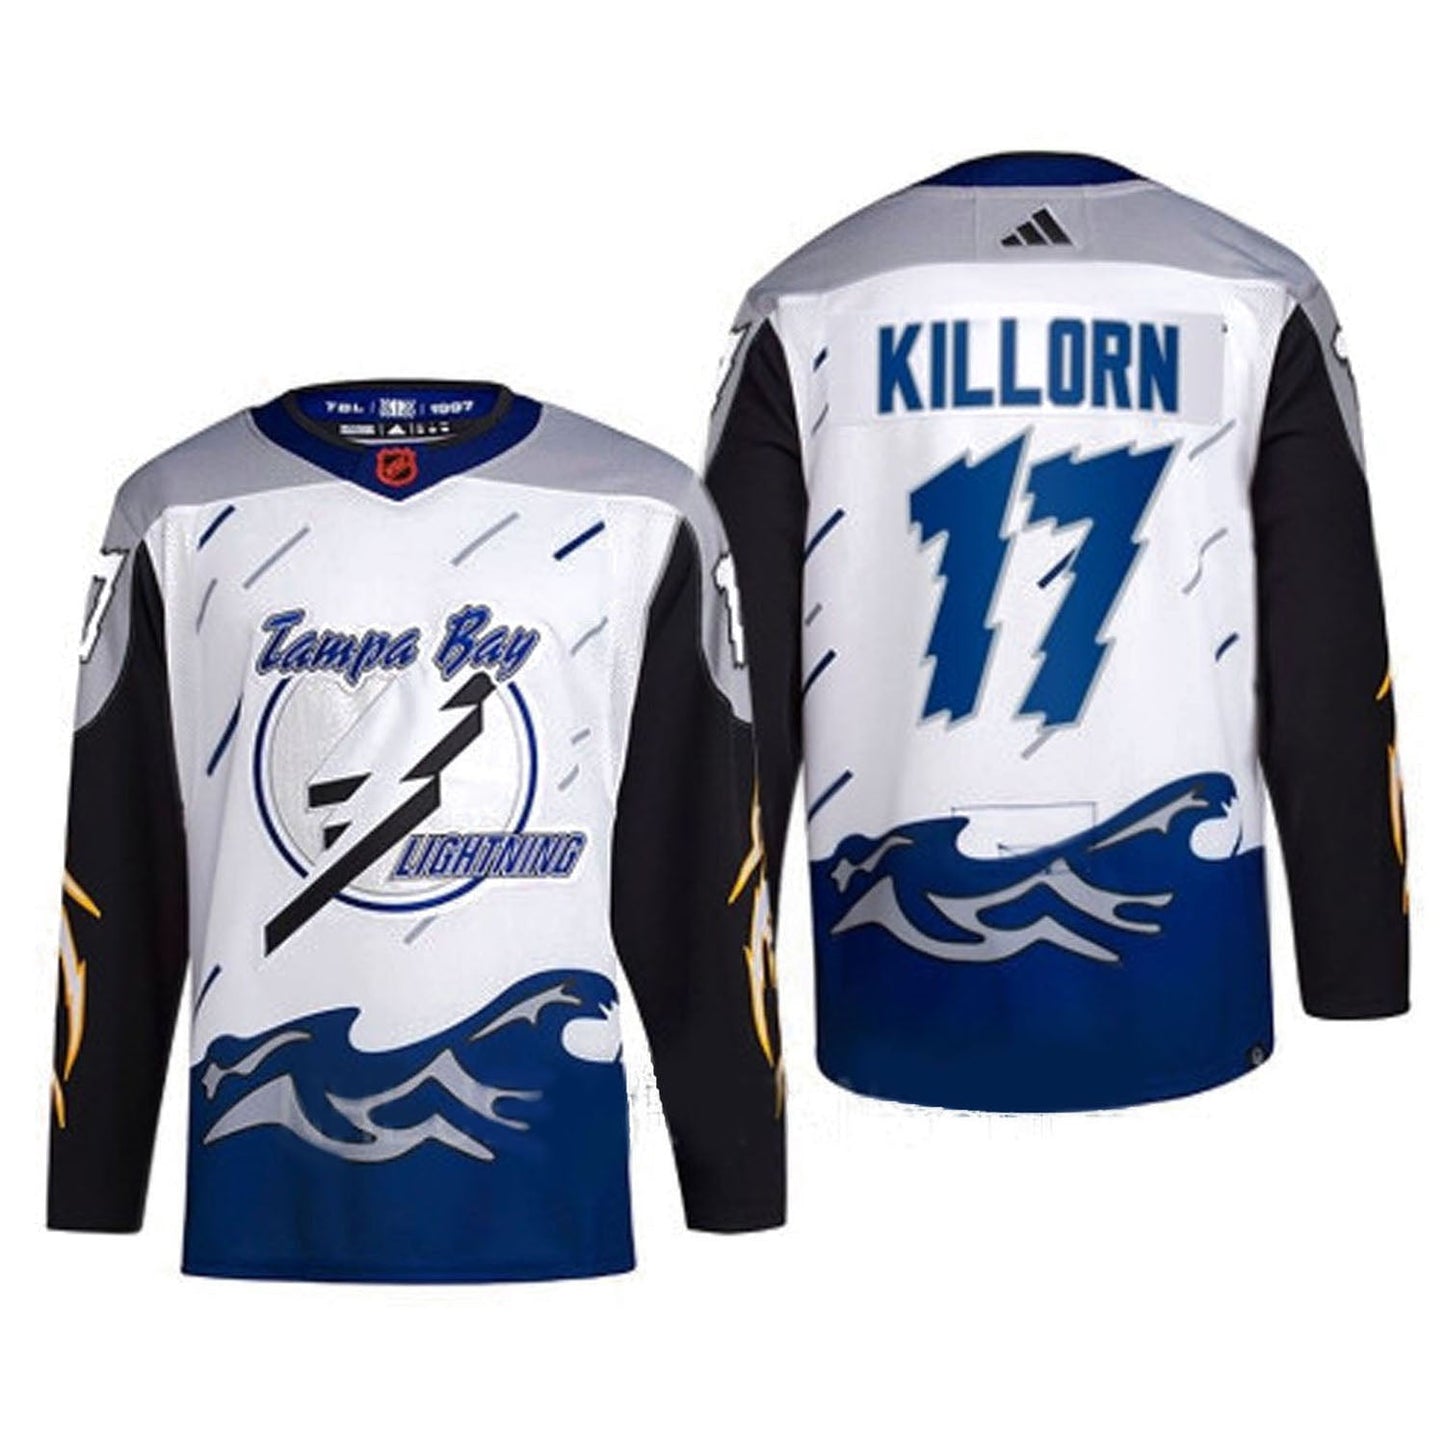 NHL Alex Killorn Tampa Bay Lightning 17 Jersey